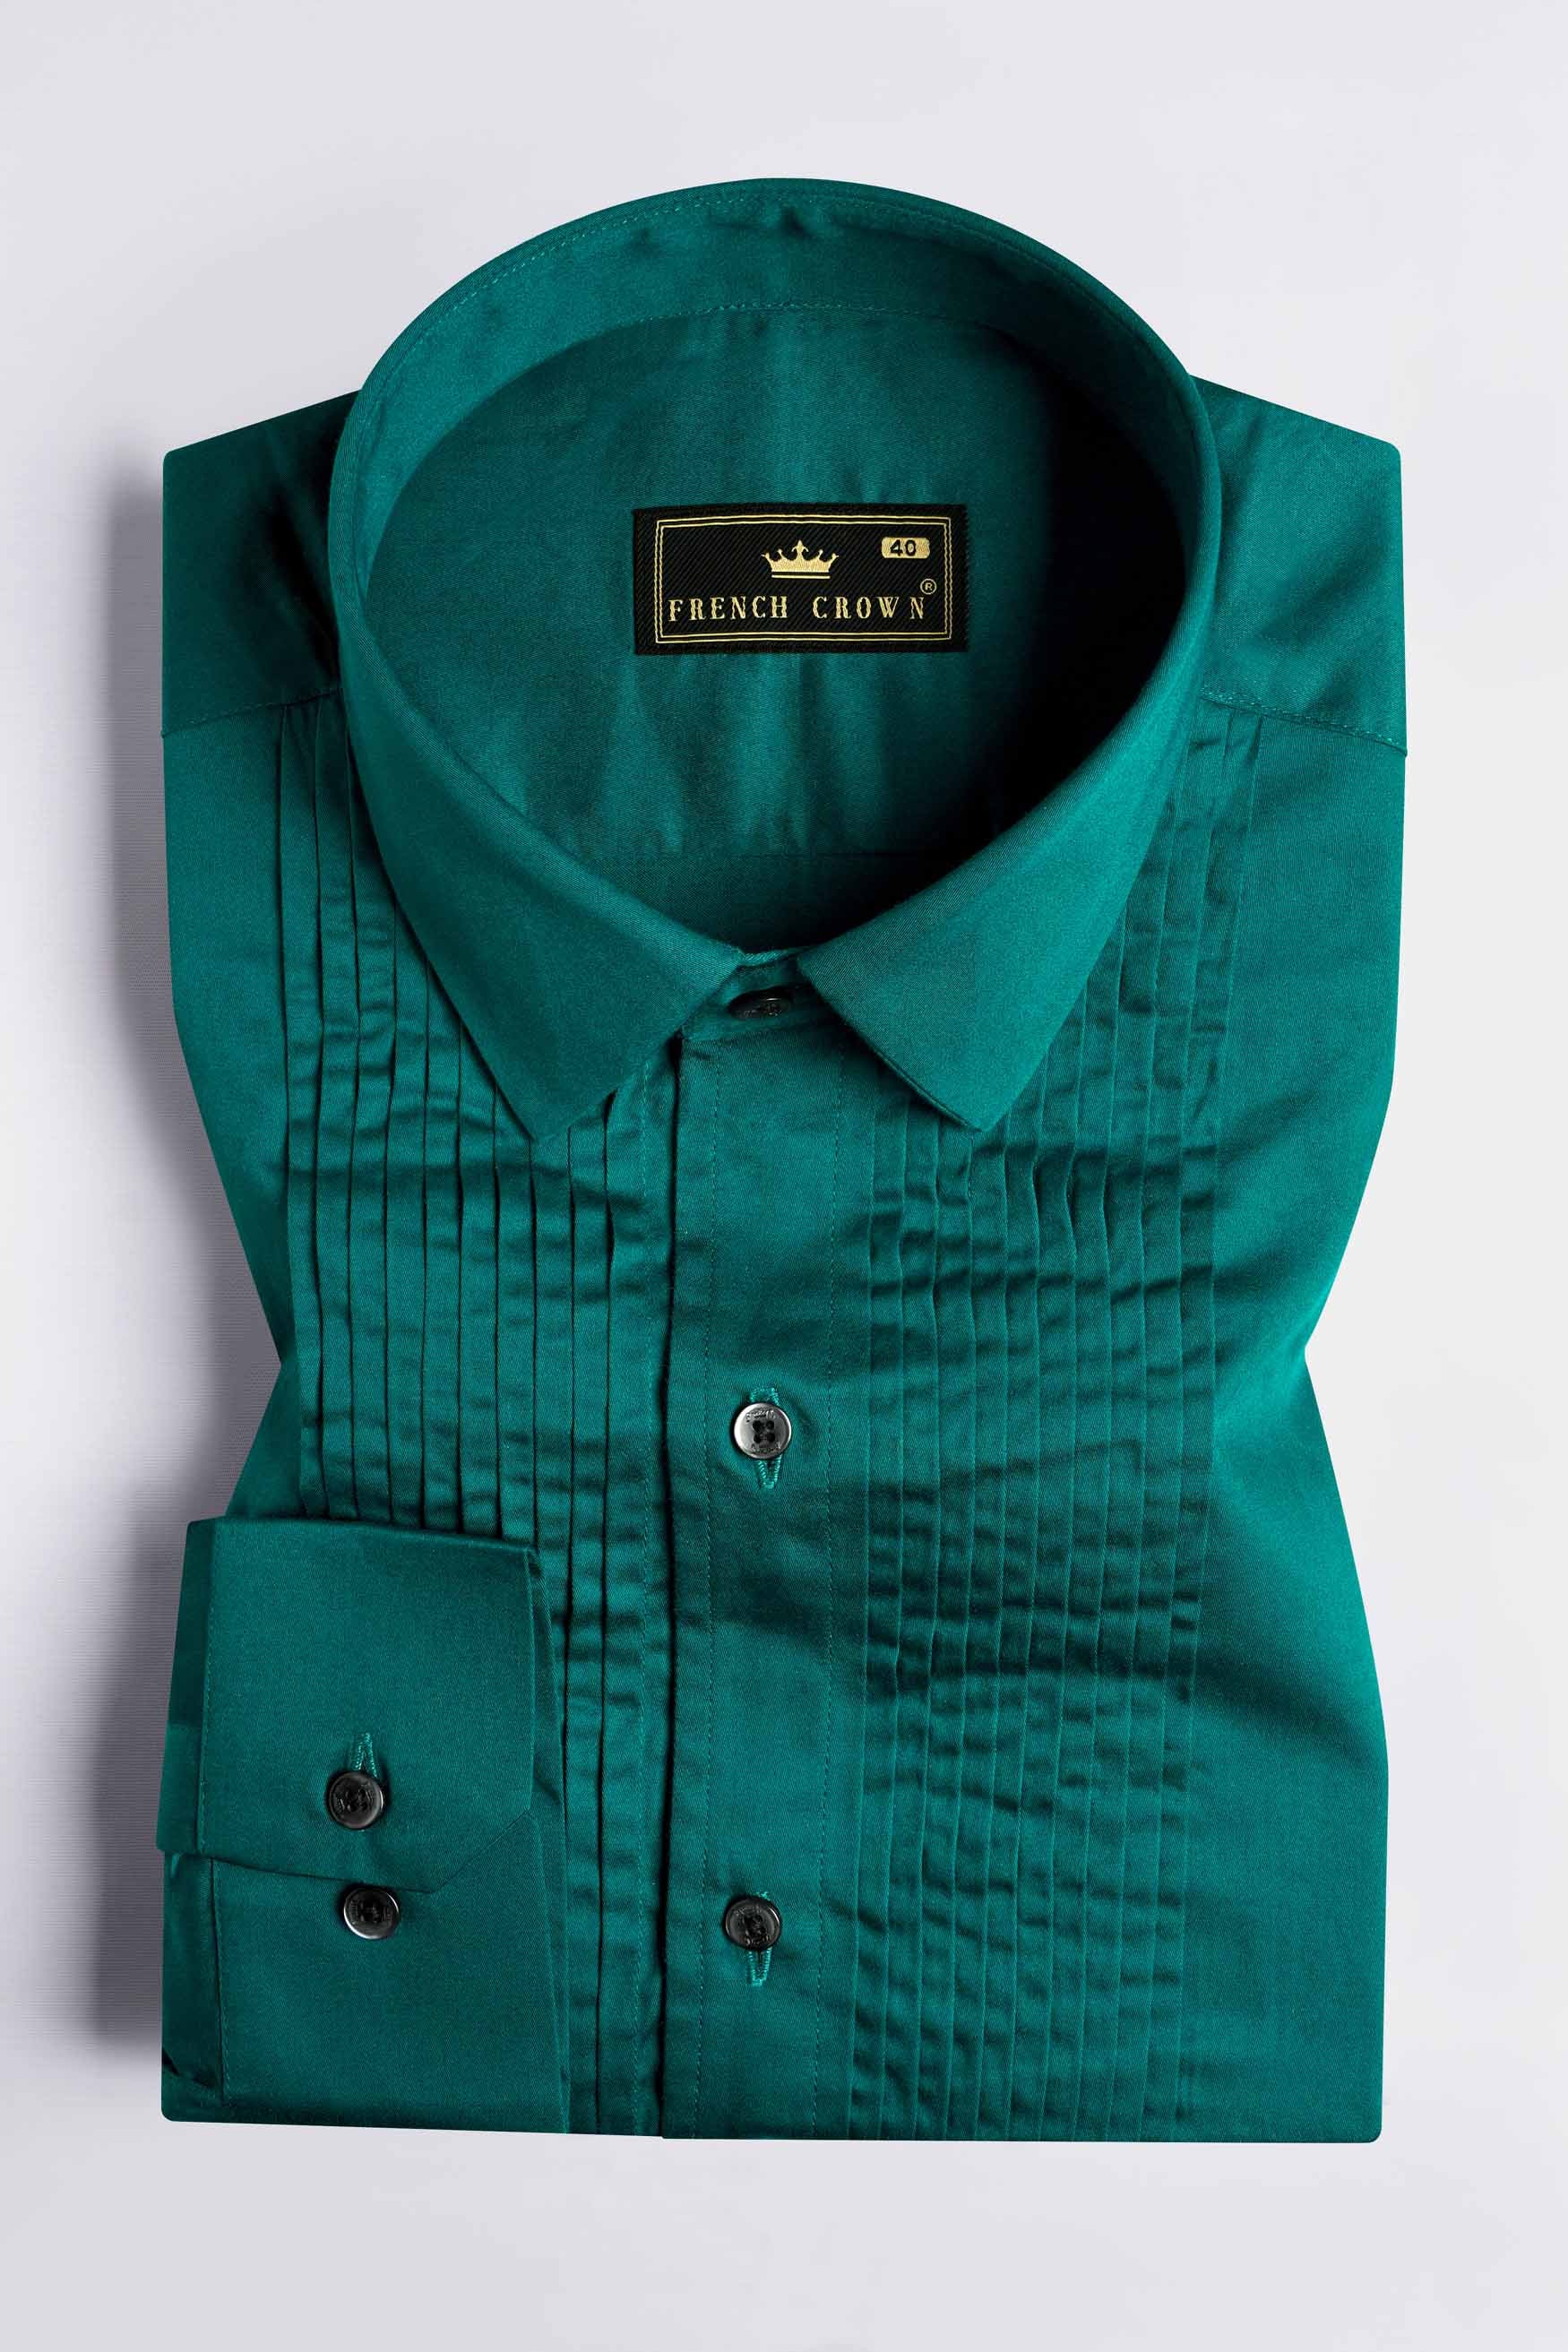 Teal Green Subtle Sheen Super Soft Premium Cotton Tuxedo Shirt